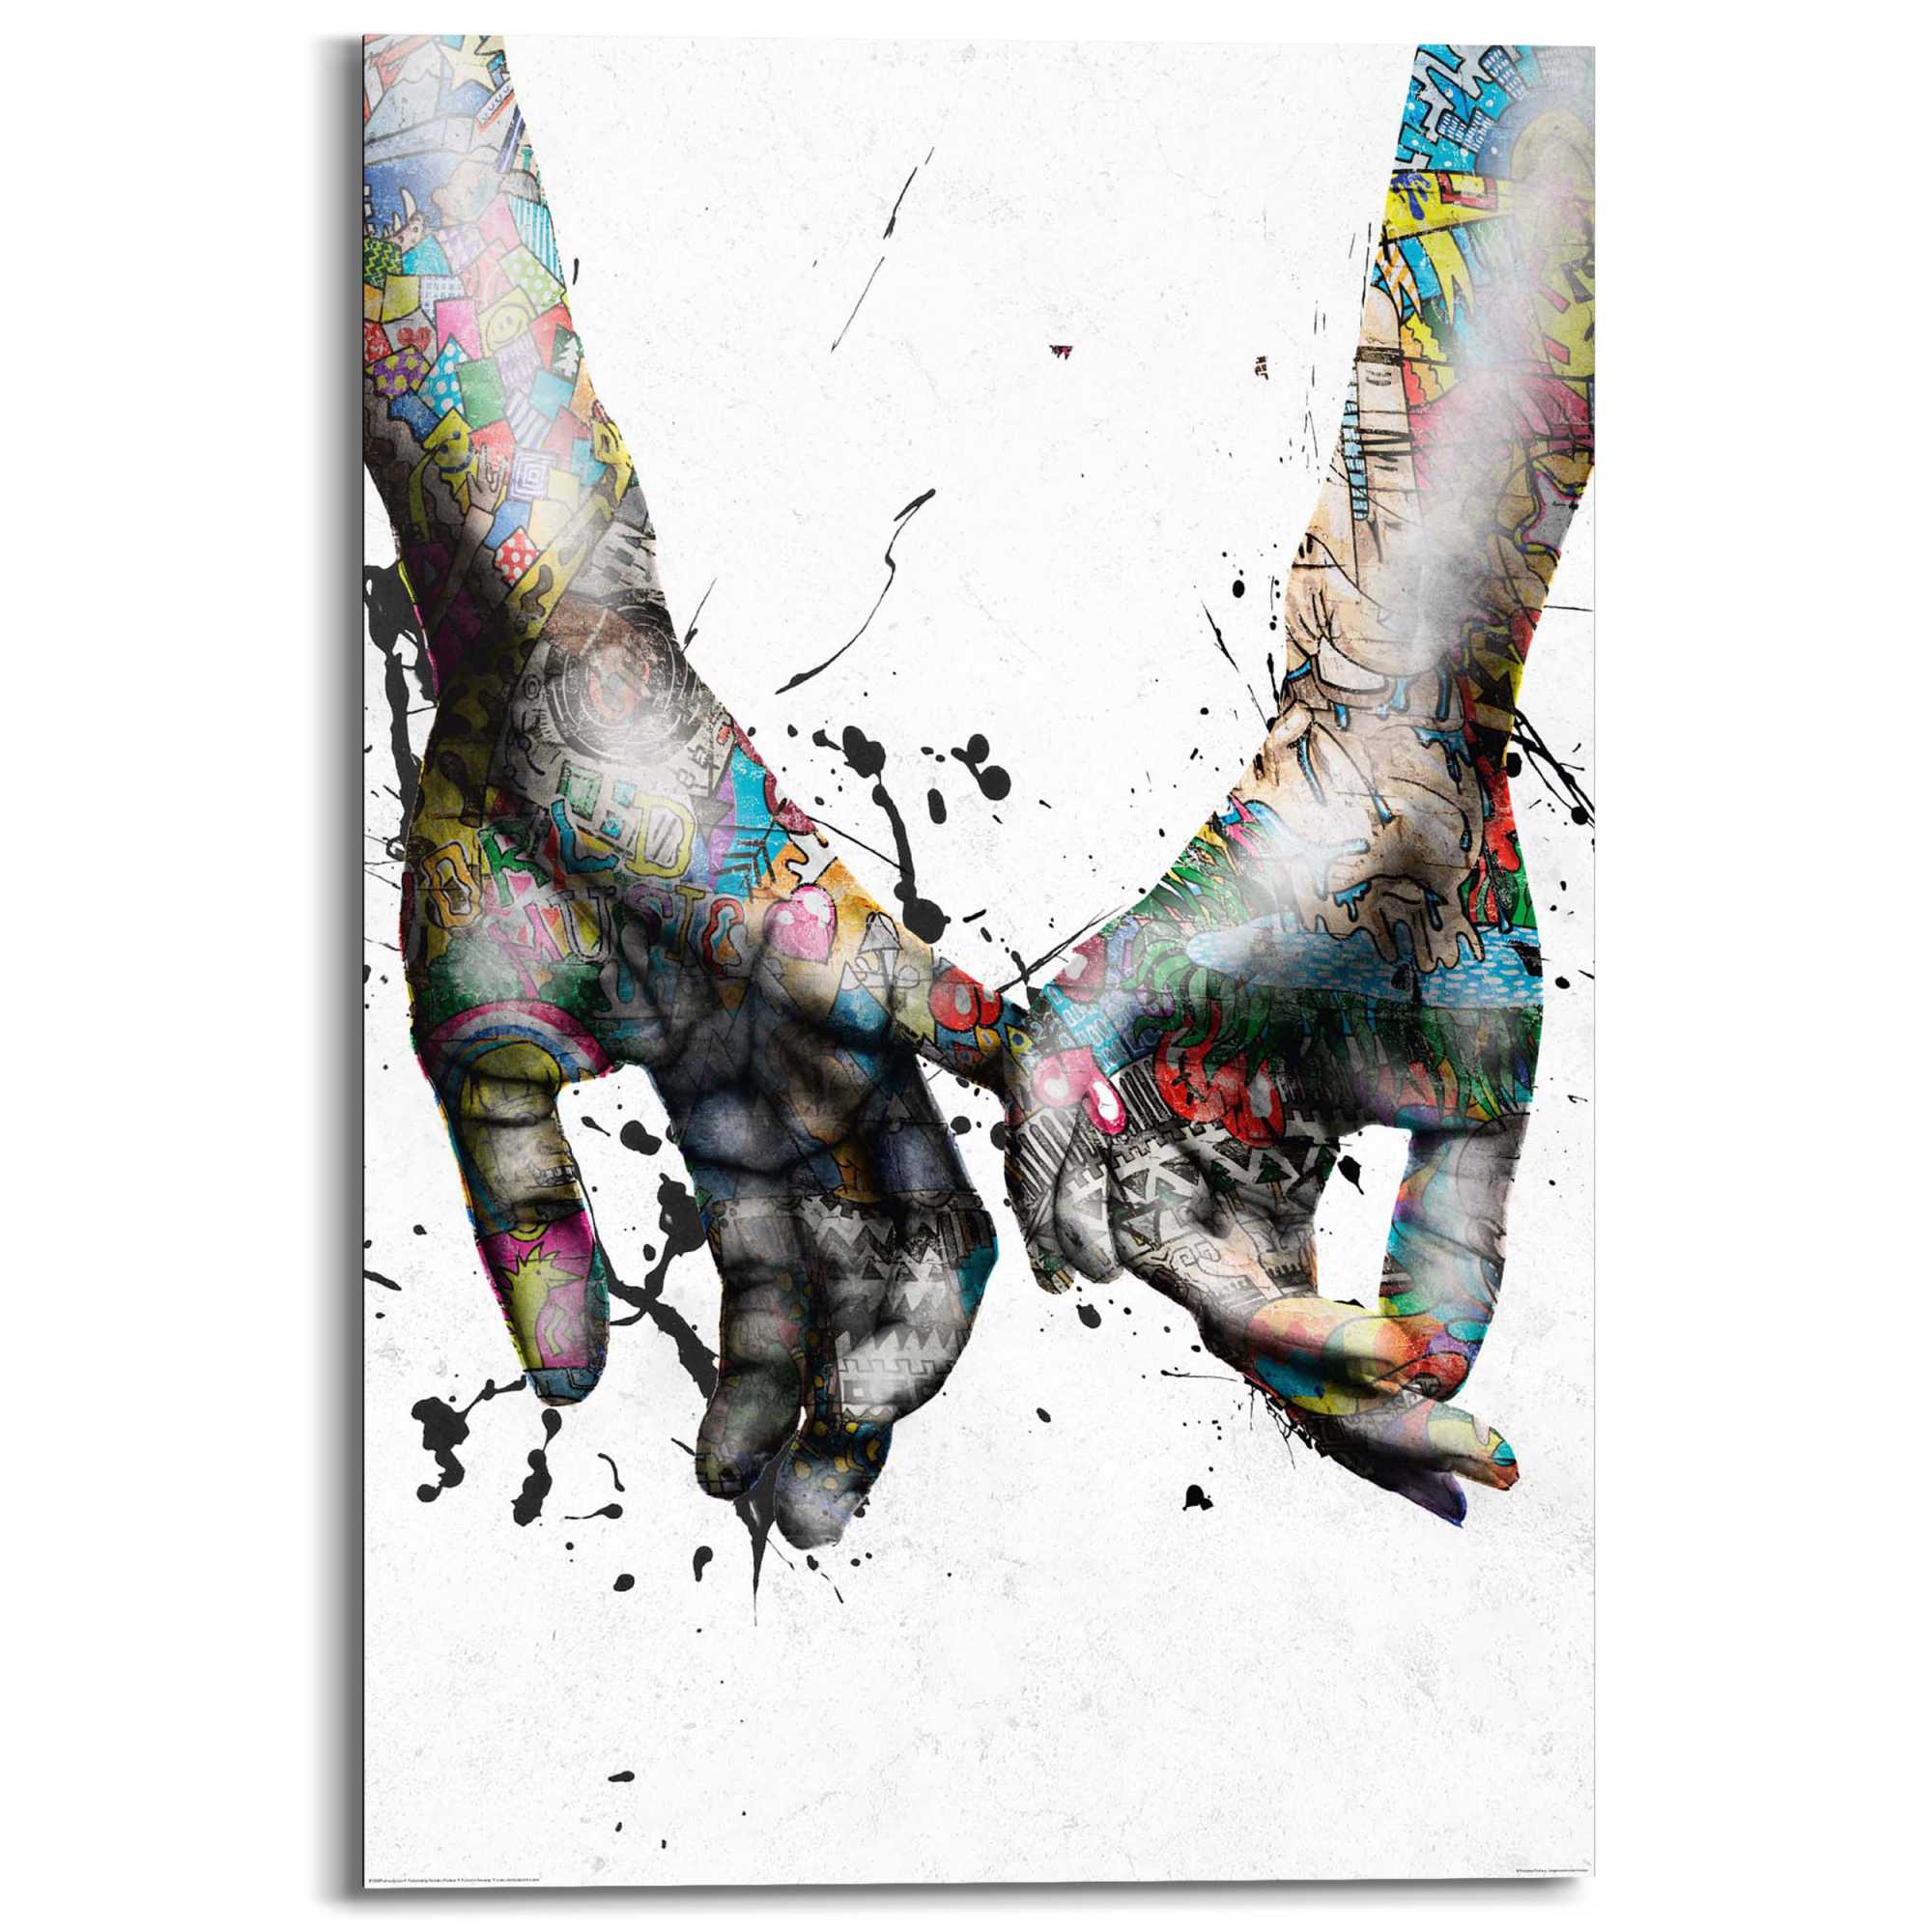 Wandbild Deco Panel Liebe Romanze - Hände